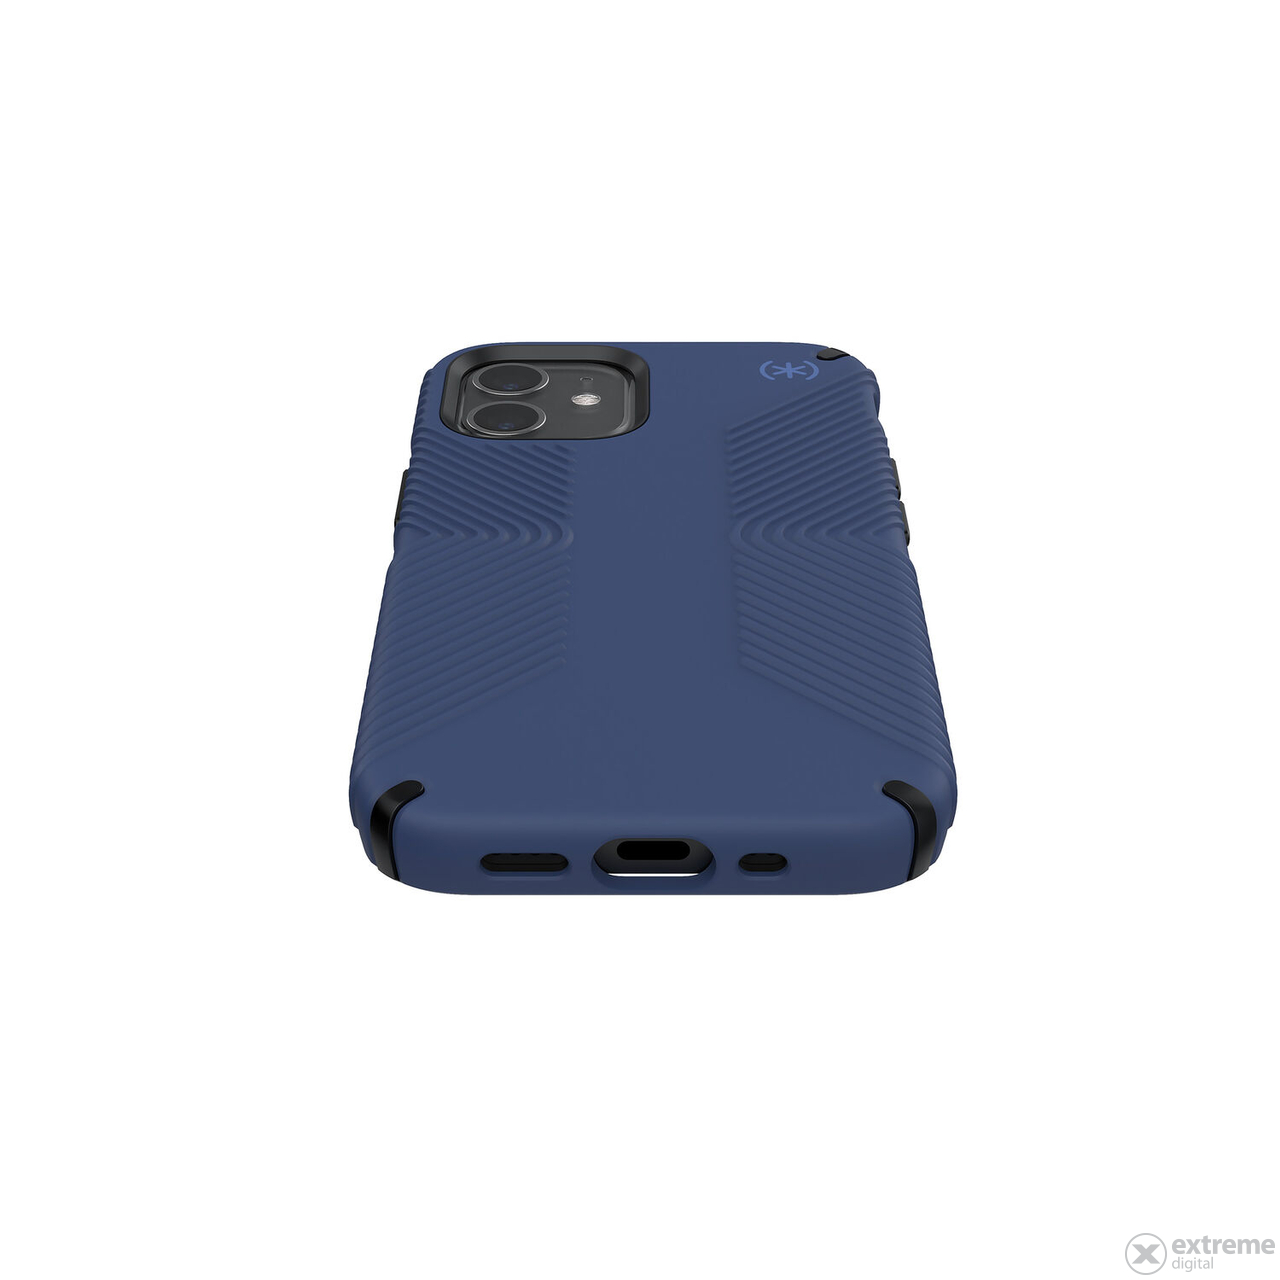 Speck 138475-9128 Presidio2 Grip gumirana/silikonska navlaka za iPhone 12 mini, tamnoplava